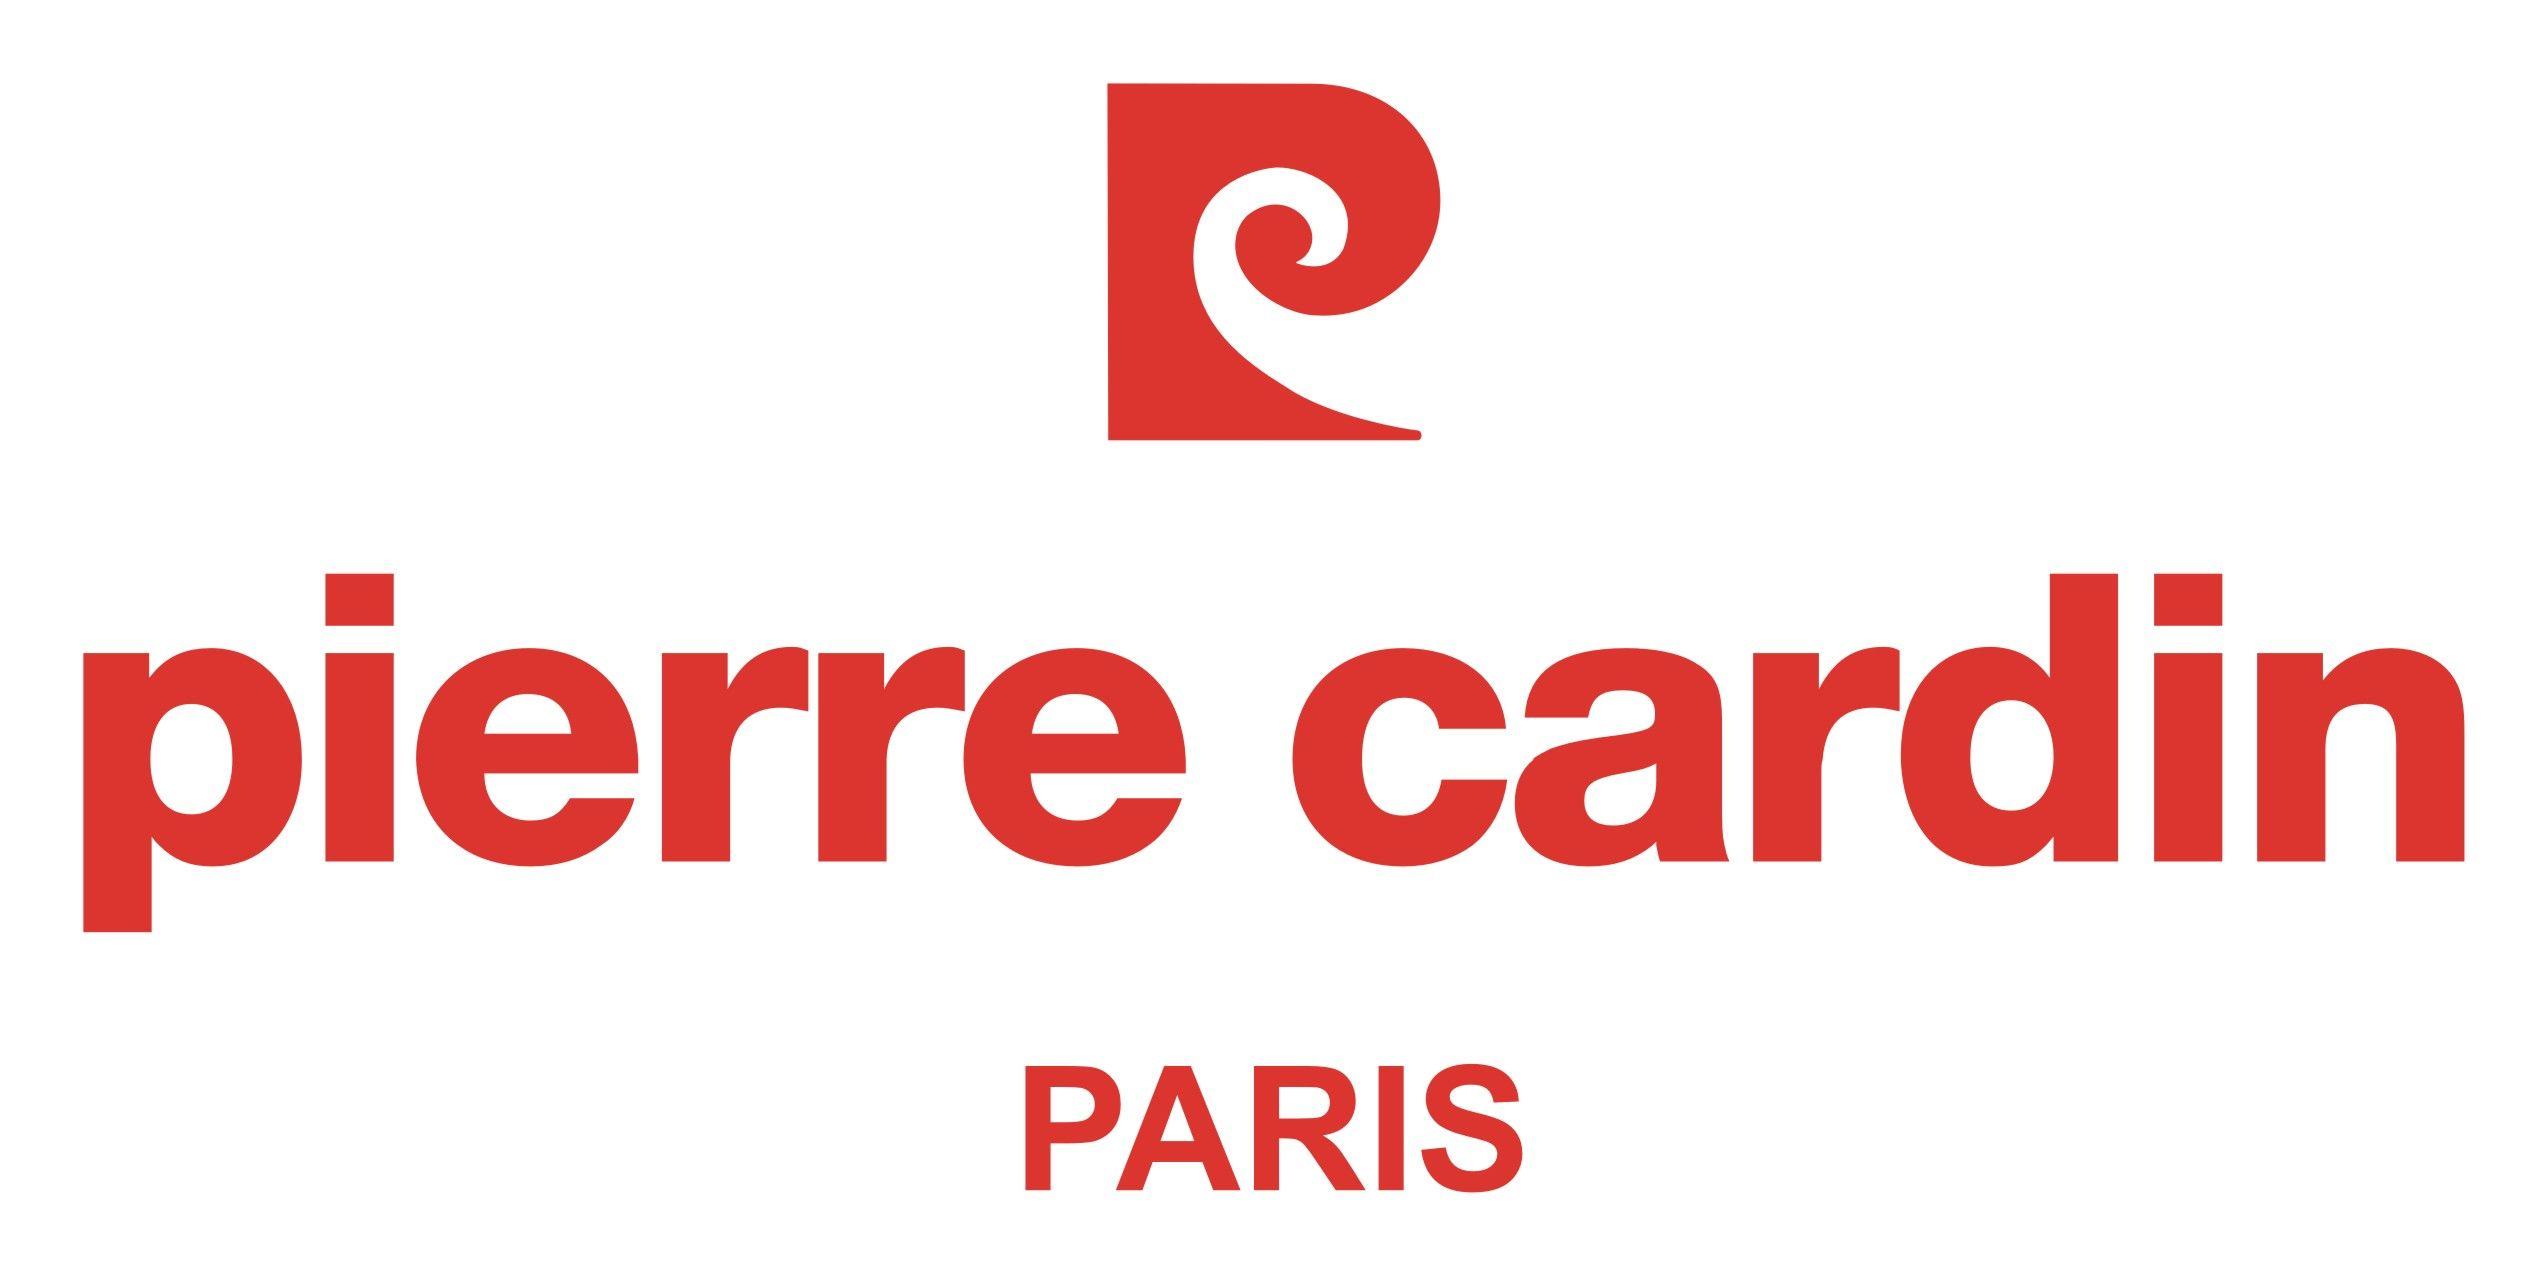 Pierre Cardin Logo - Image result for pierre cardin logo | pierre cardin | Pierre cardin ...